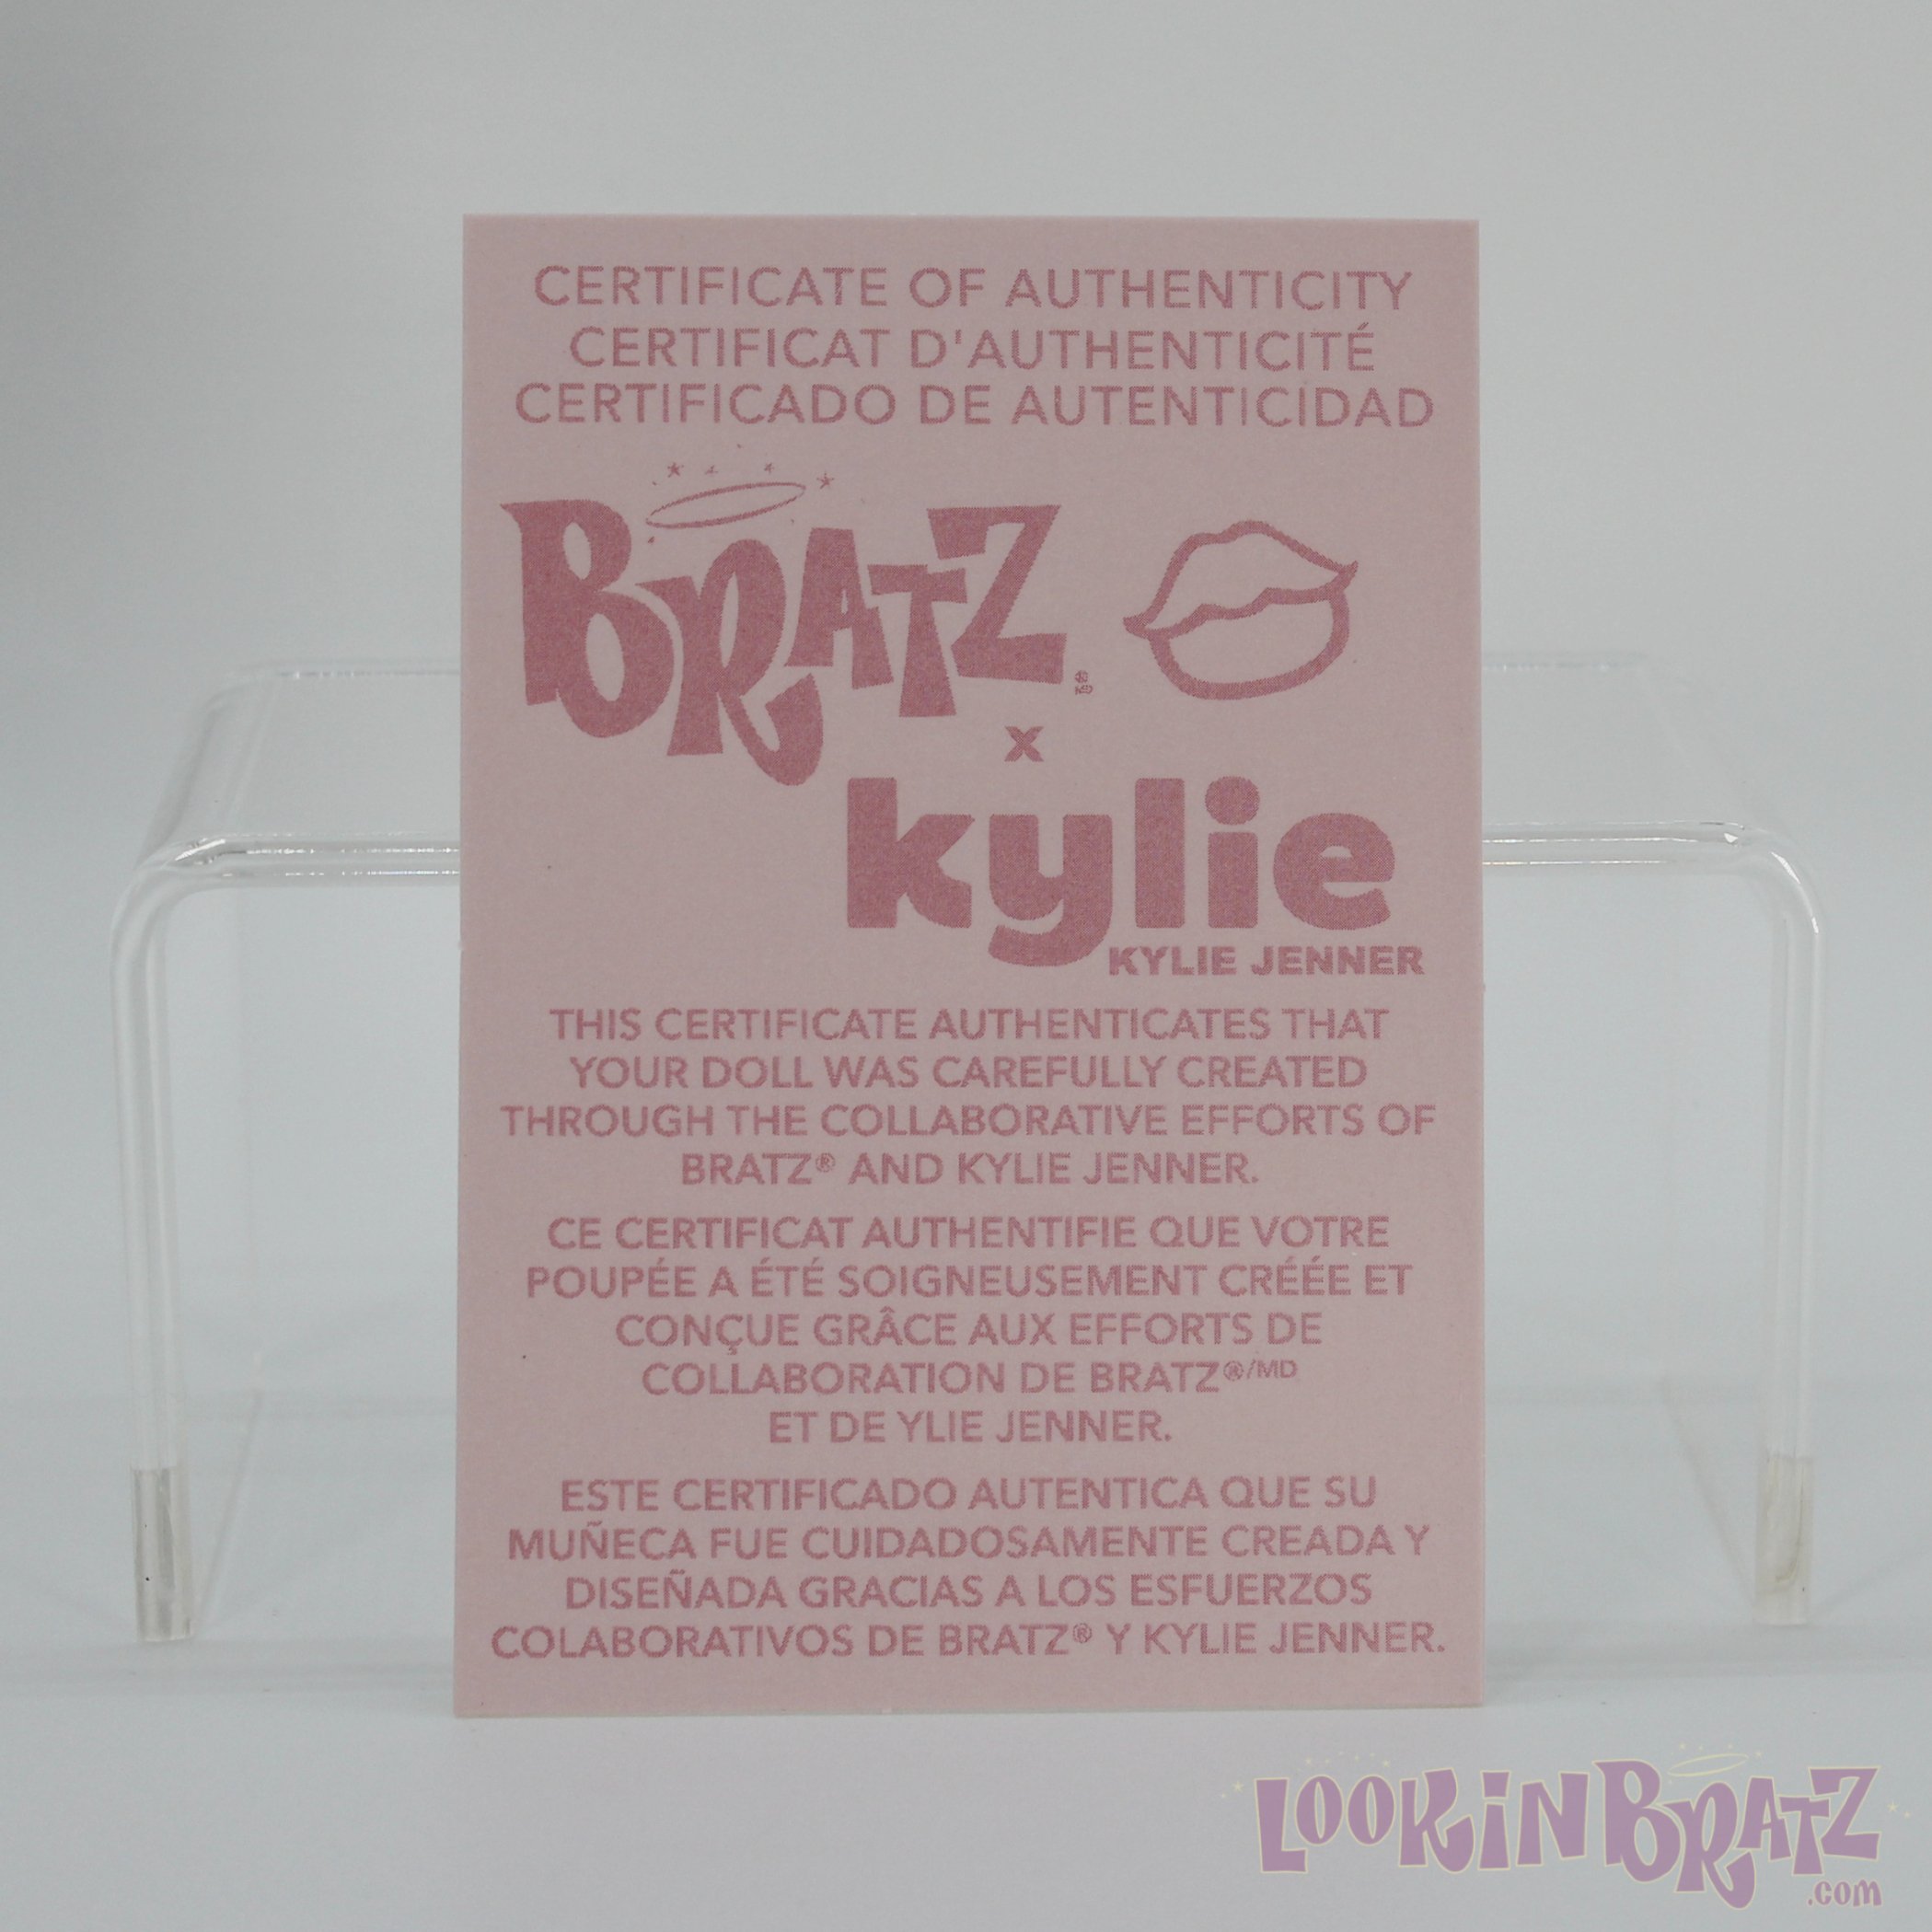 Bratz x Kylie Jenner Certificate of Authenticity